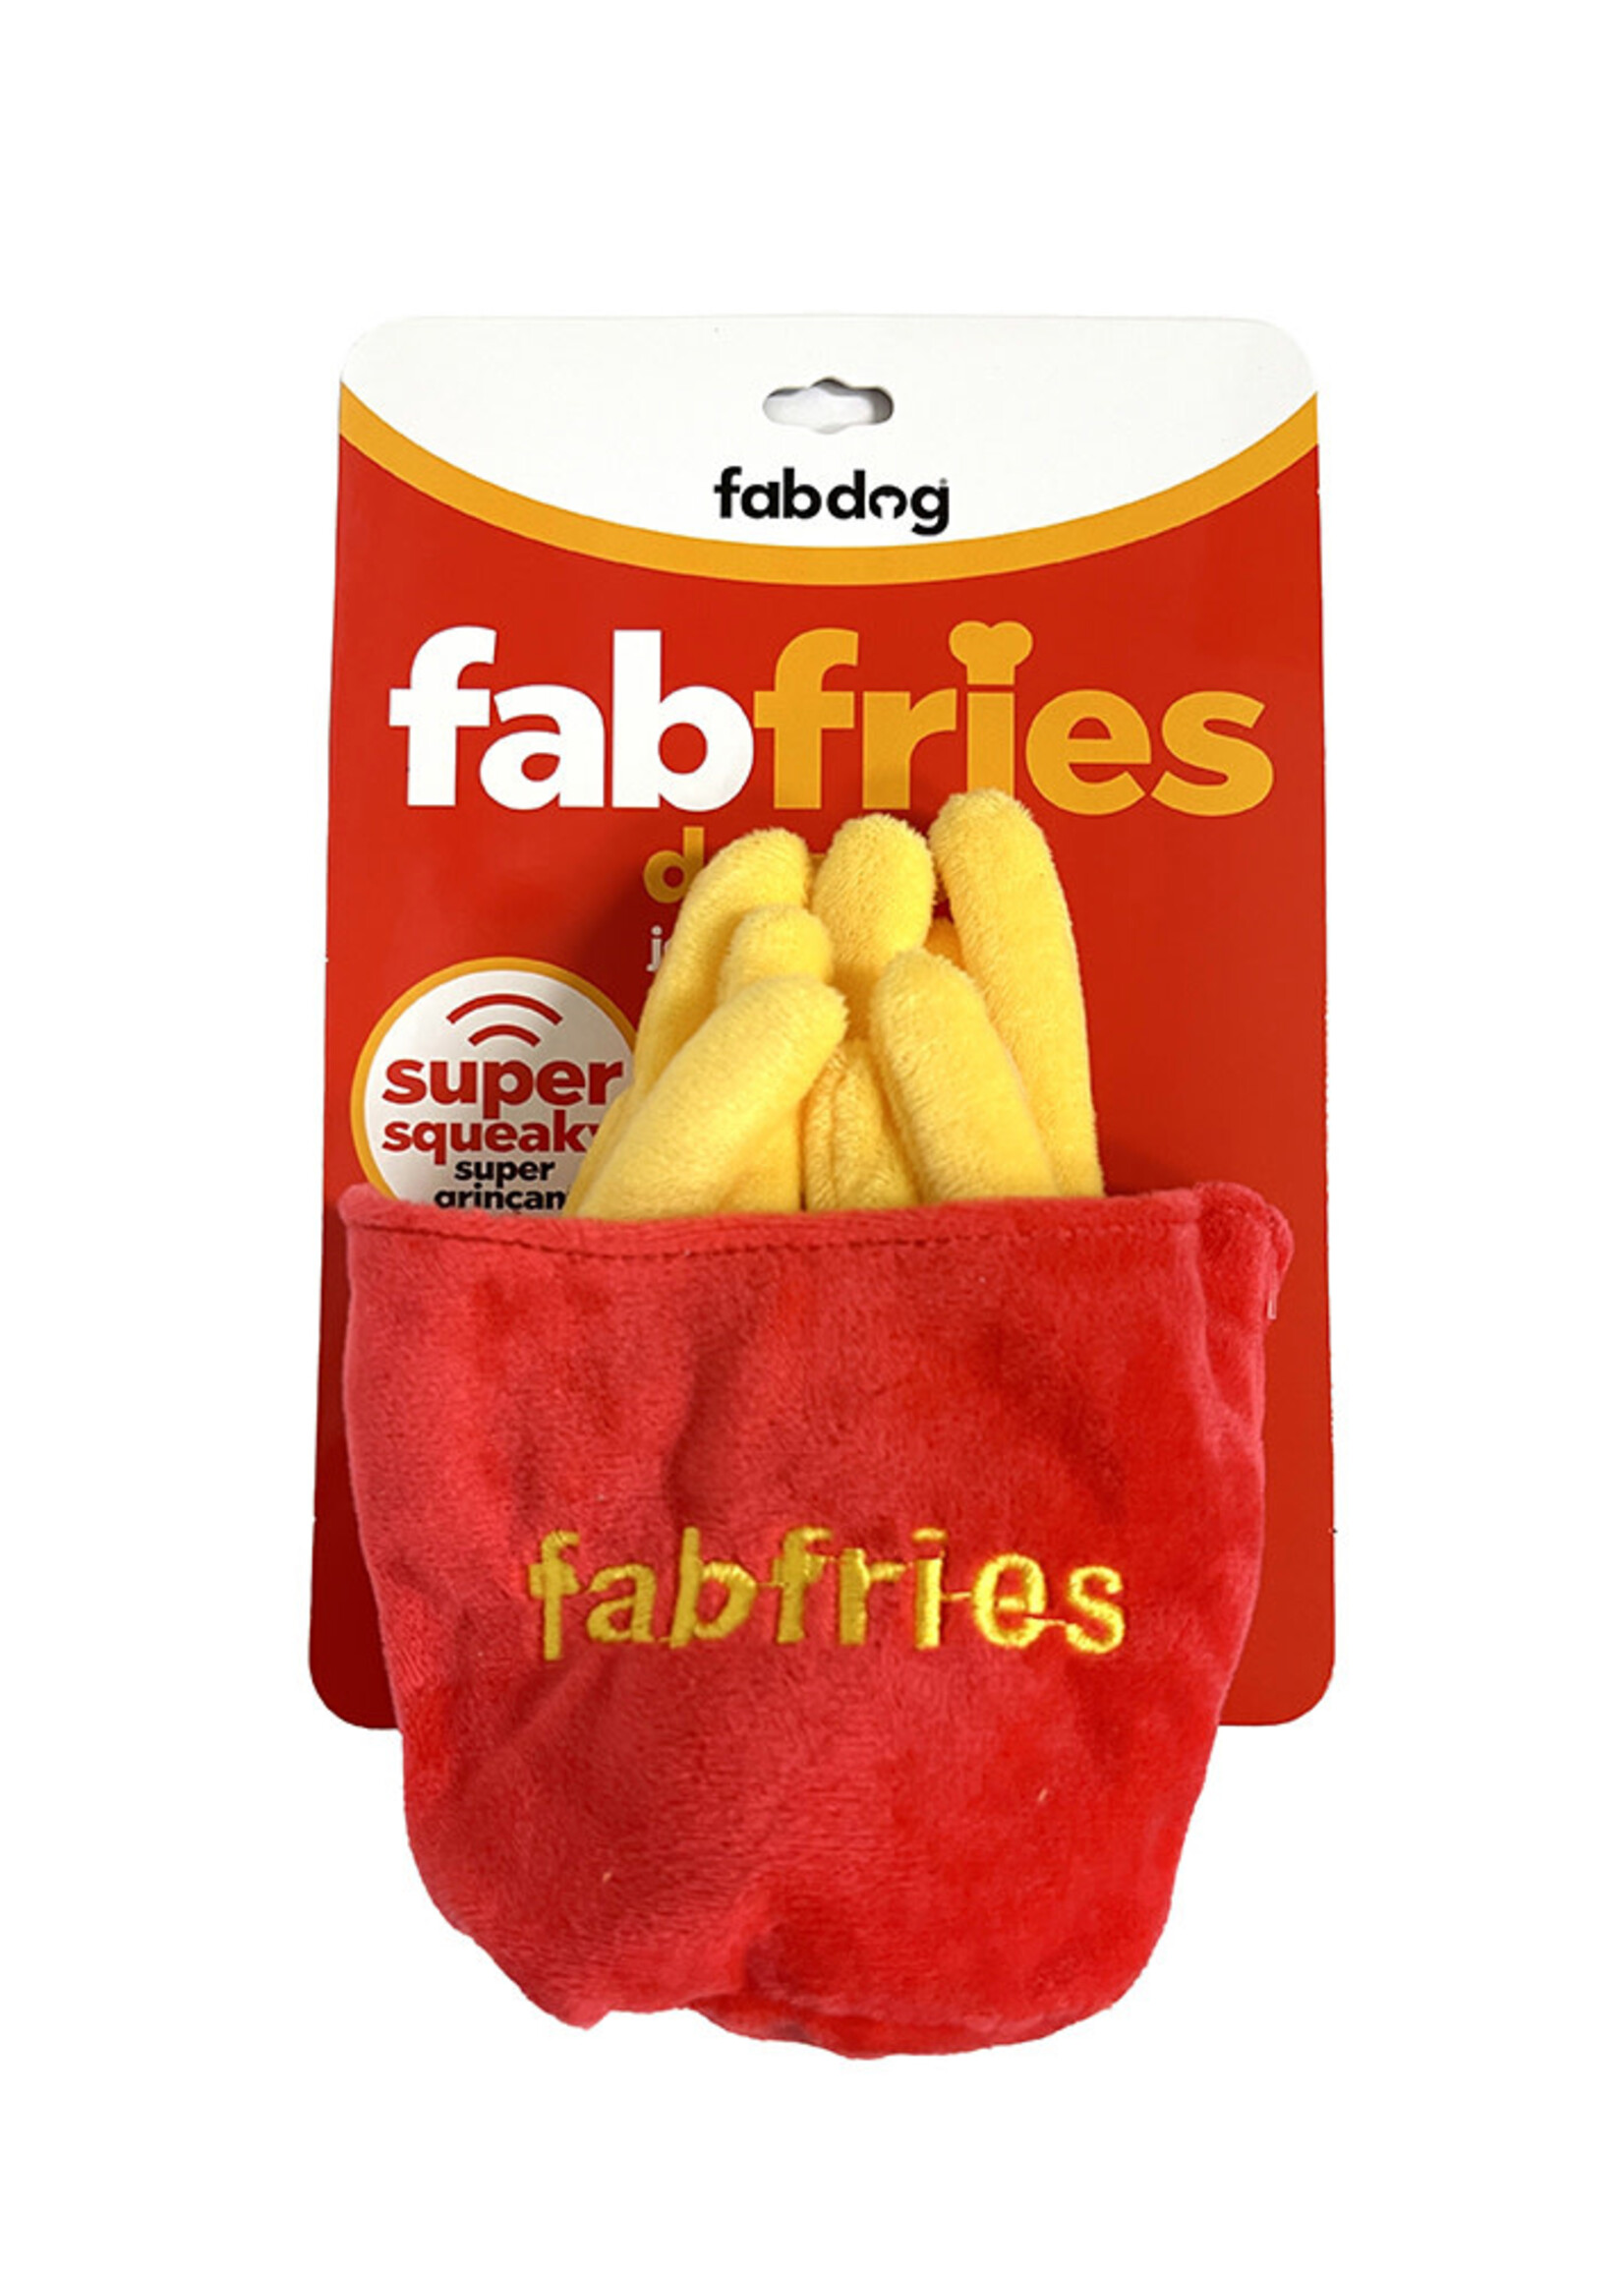 Fabdog Fabdog Foodies Fab Fries